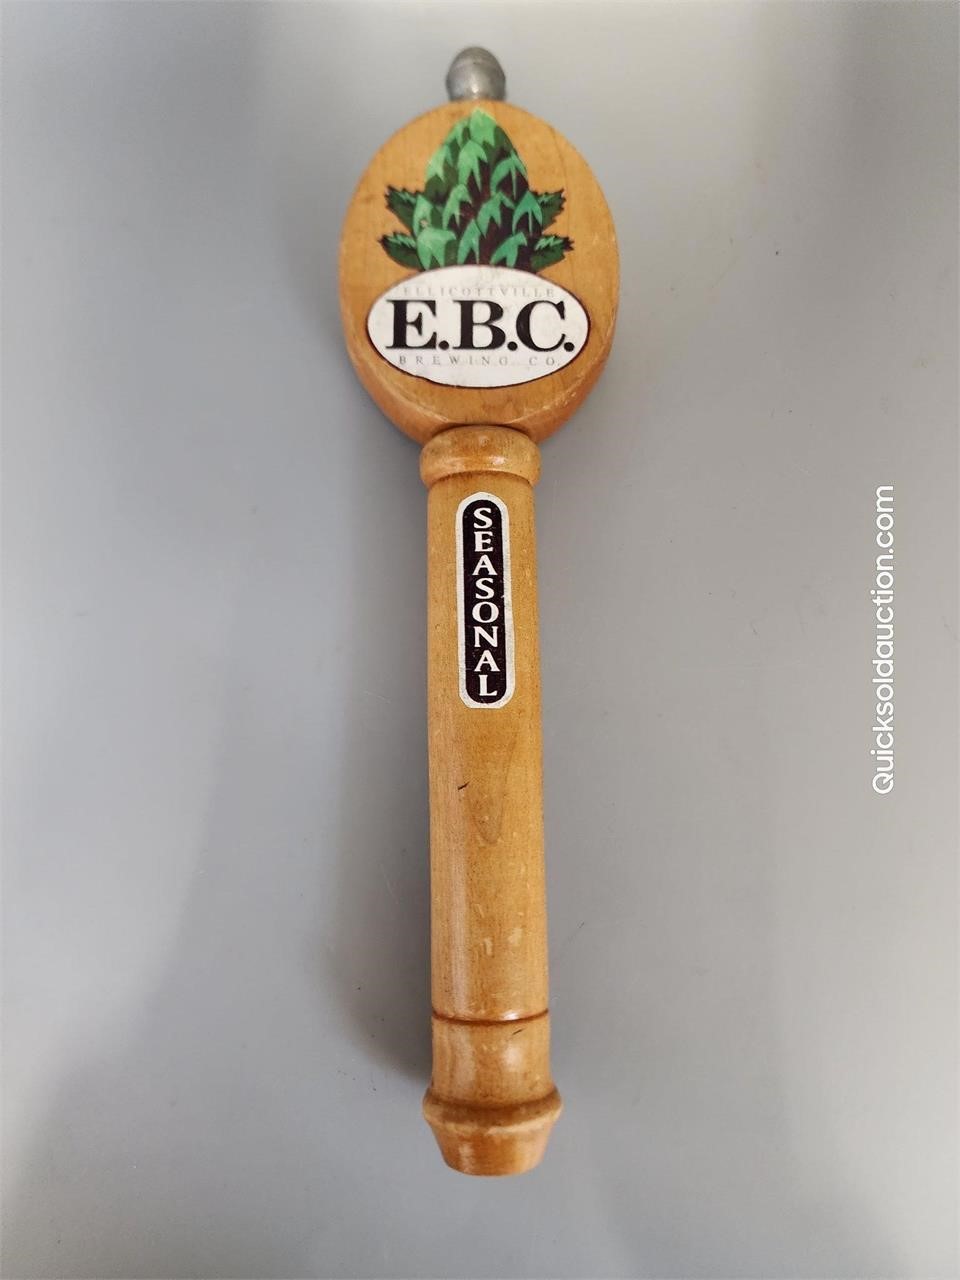 Ellicottville E.B.C. Brewing Co Seasonal Beer Tap